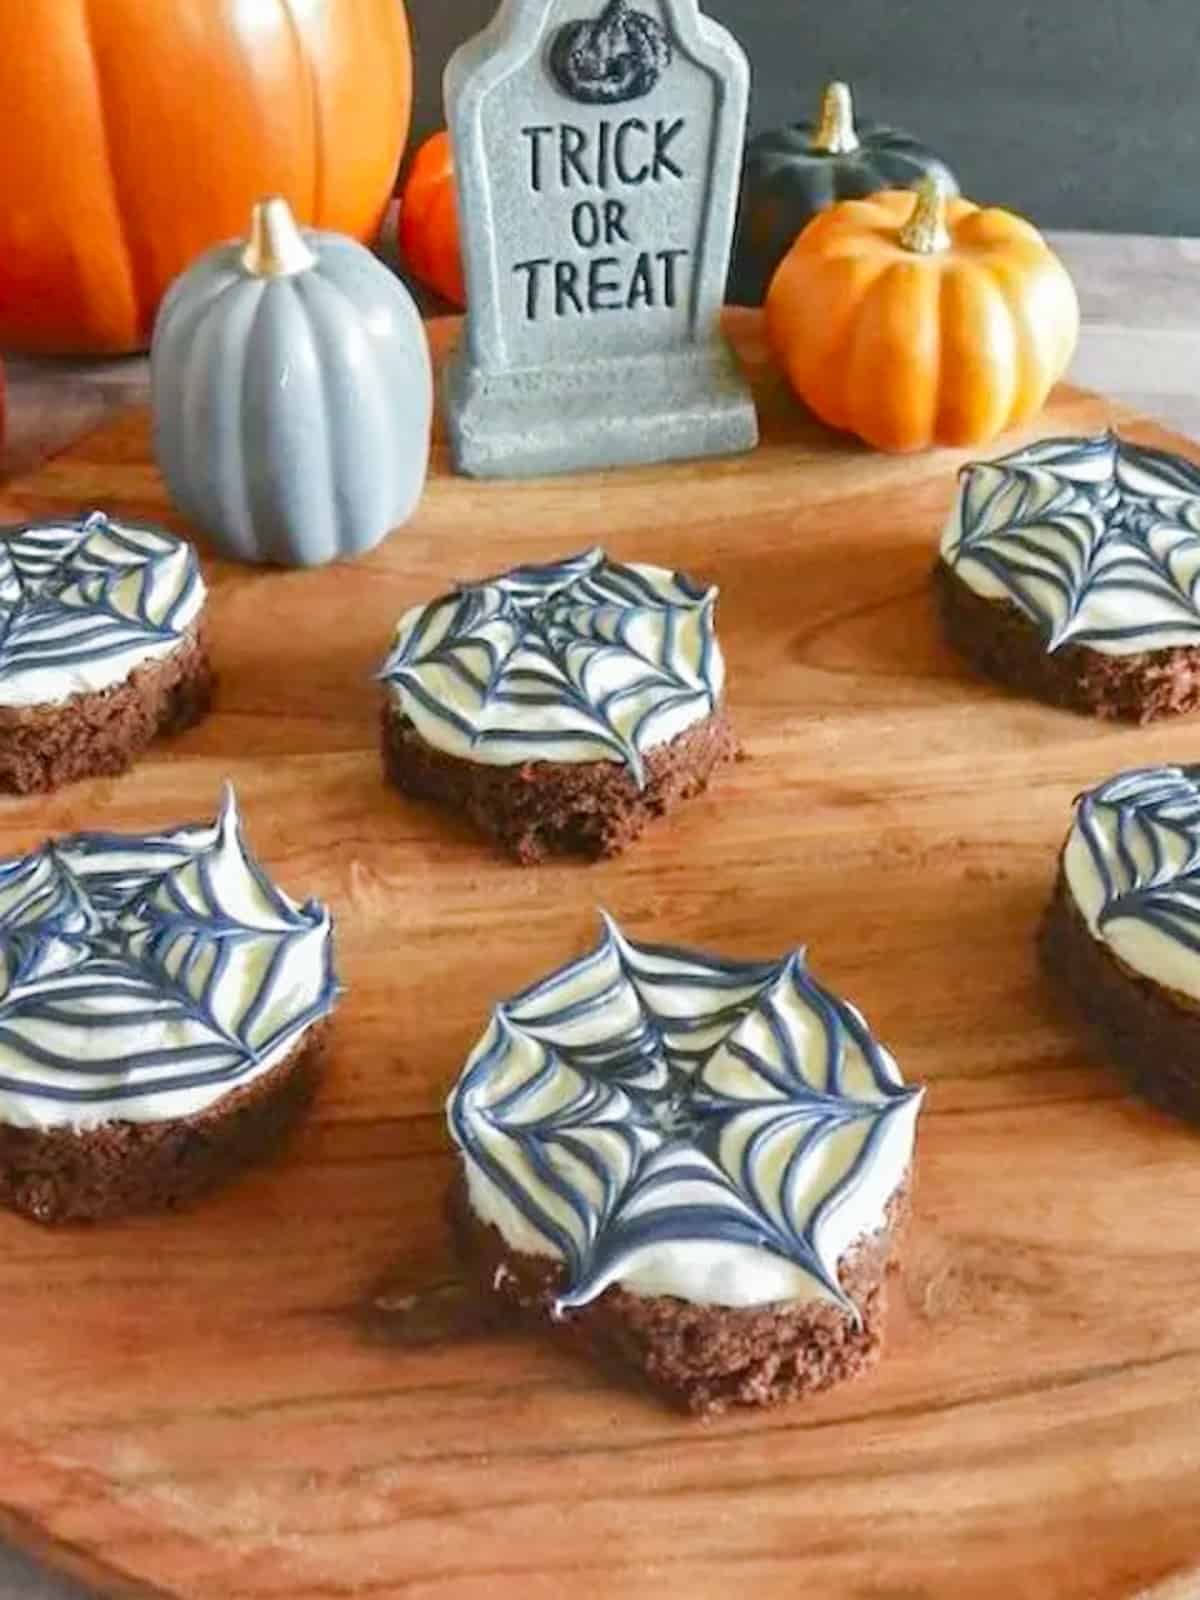 round brownies decorated to look like spiderwebs